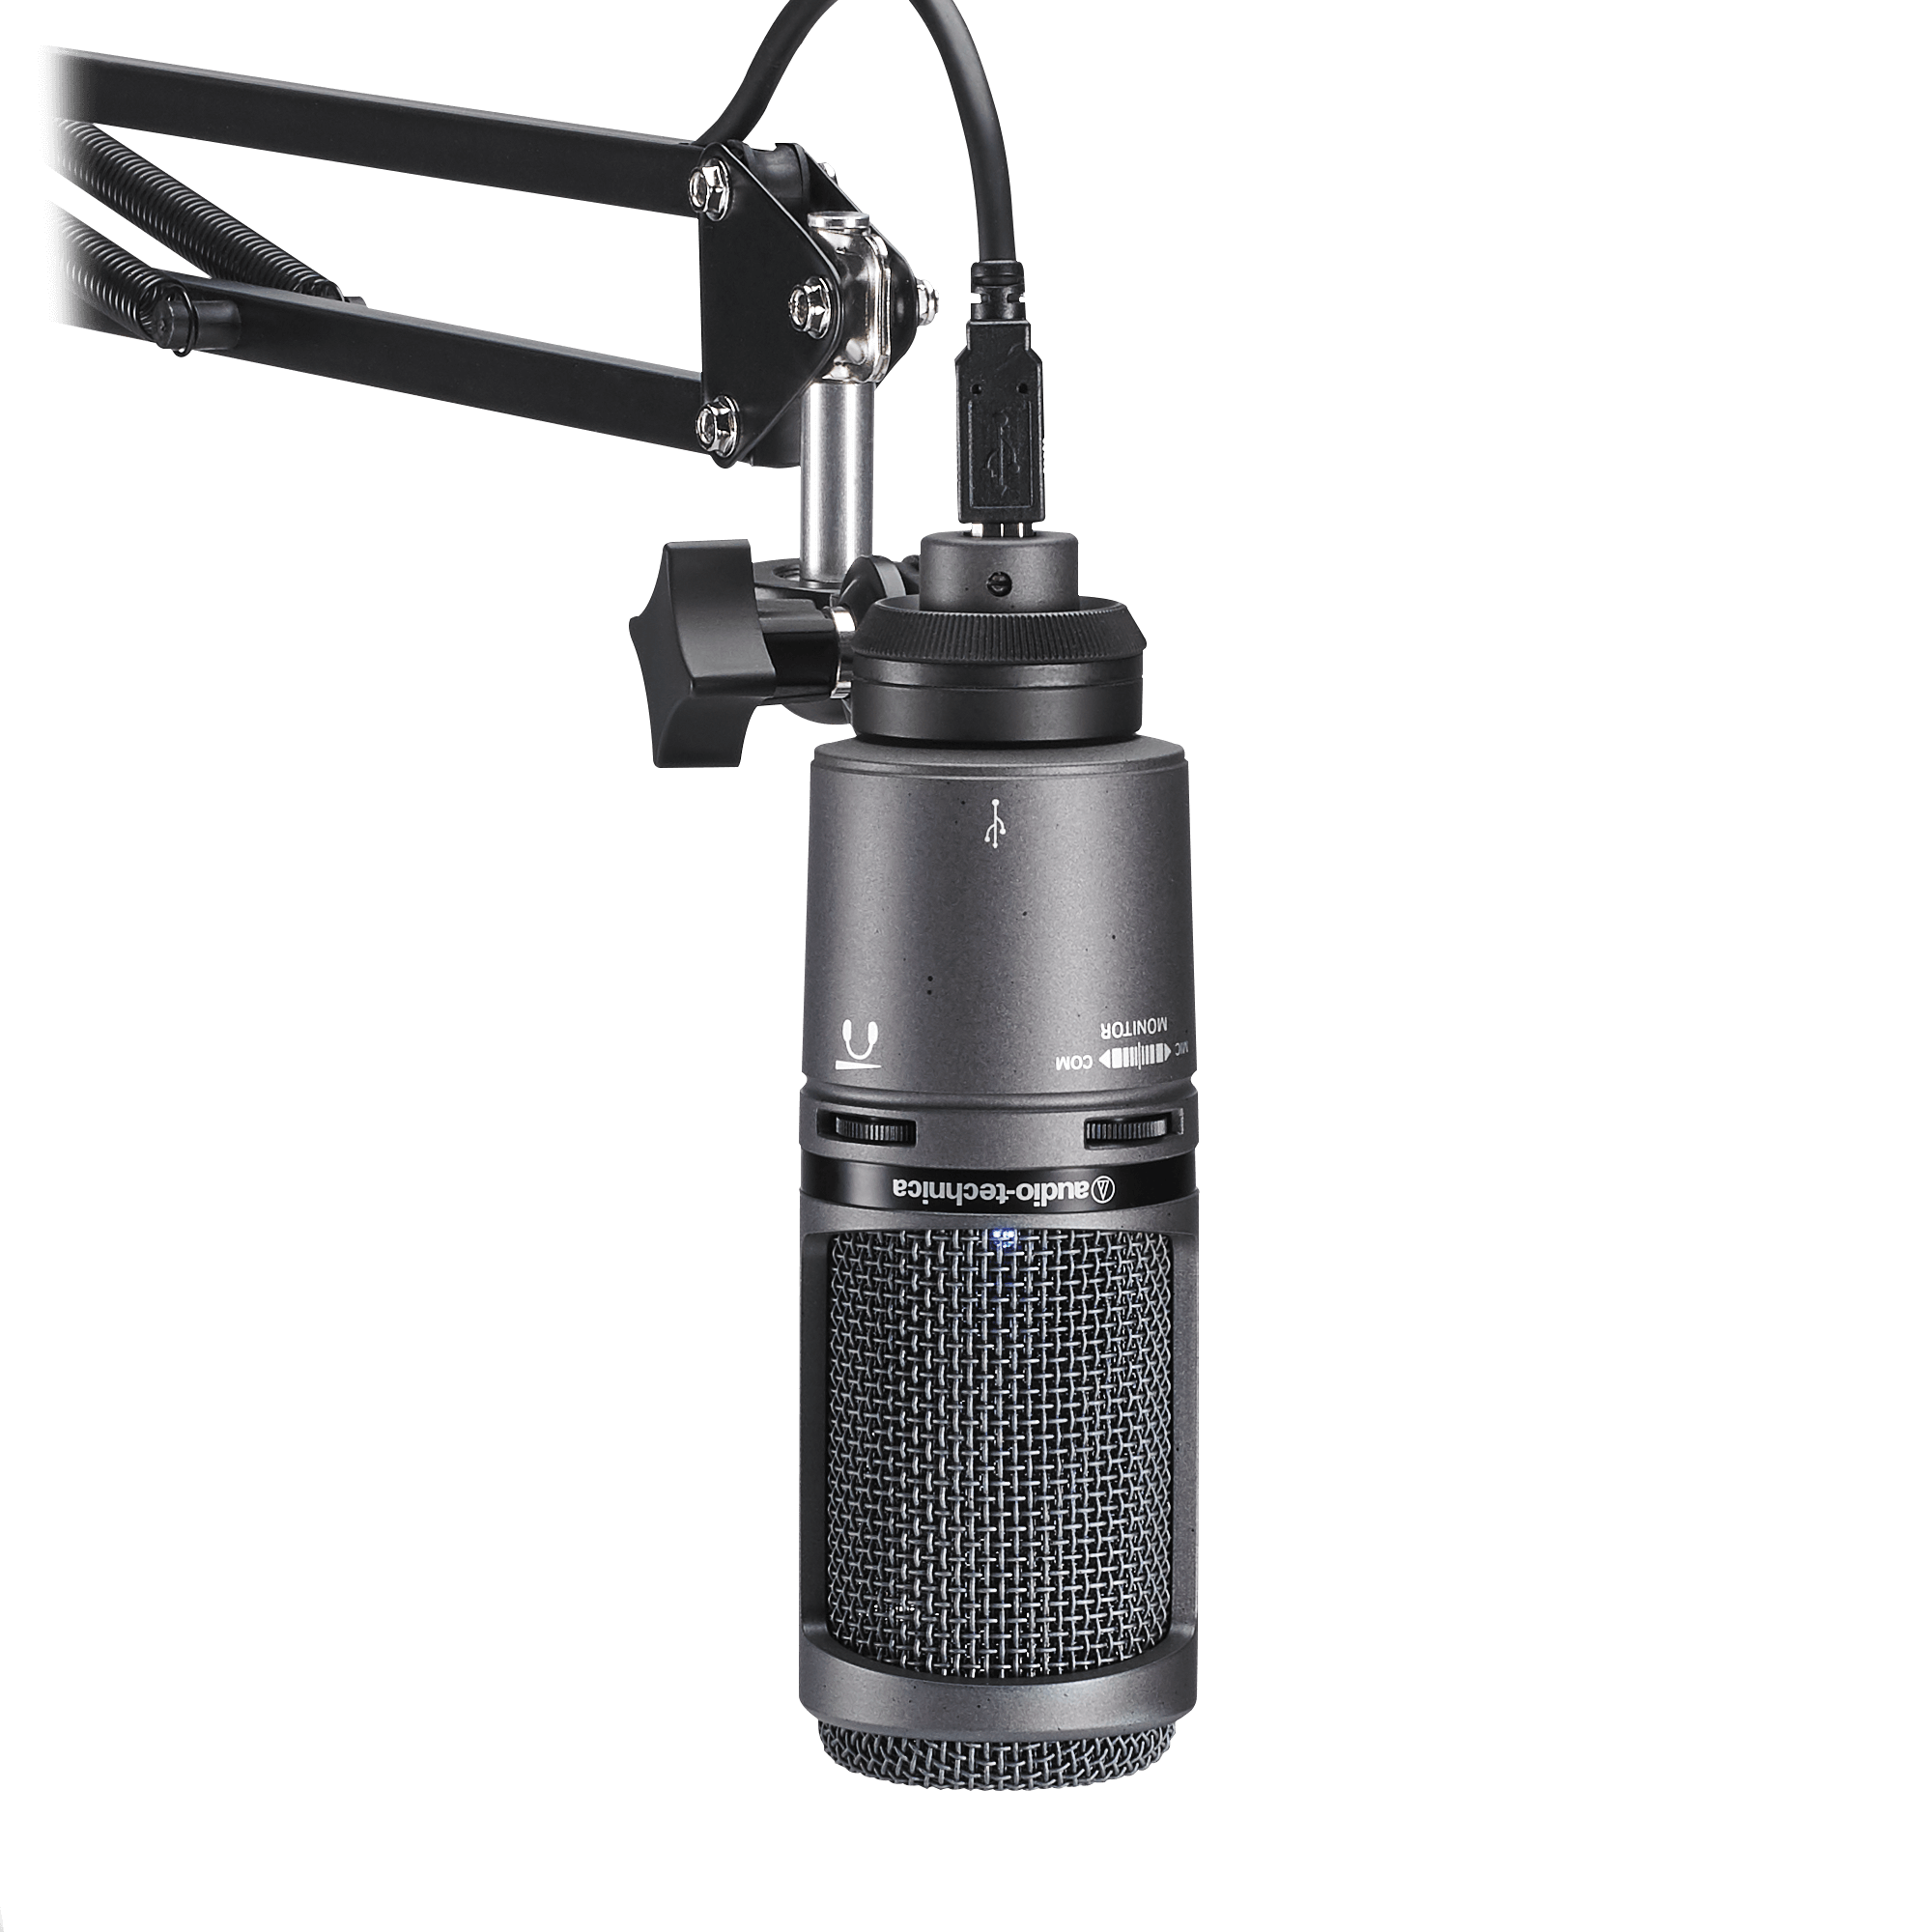 Audio-Technica AT2020USB+PK Podcasting USB Microphone Bundle - New